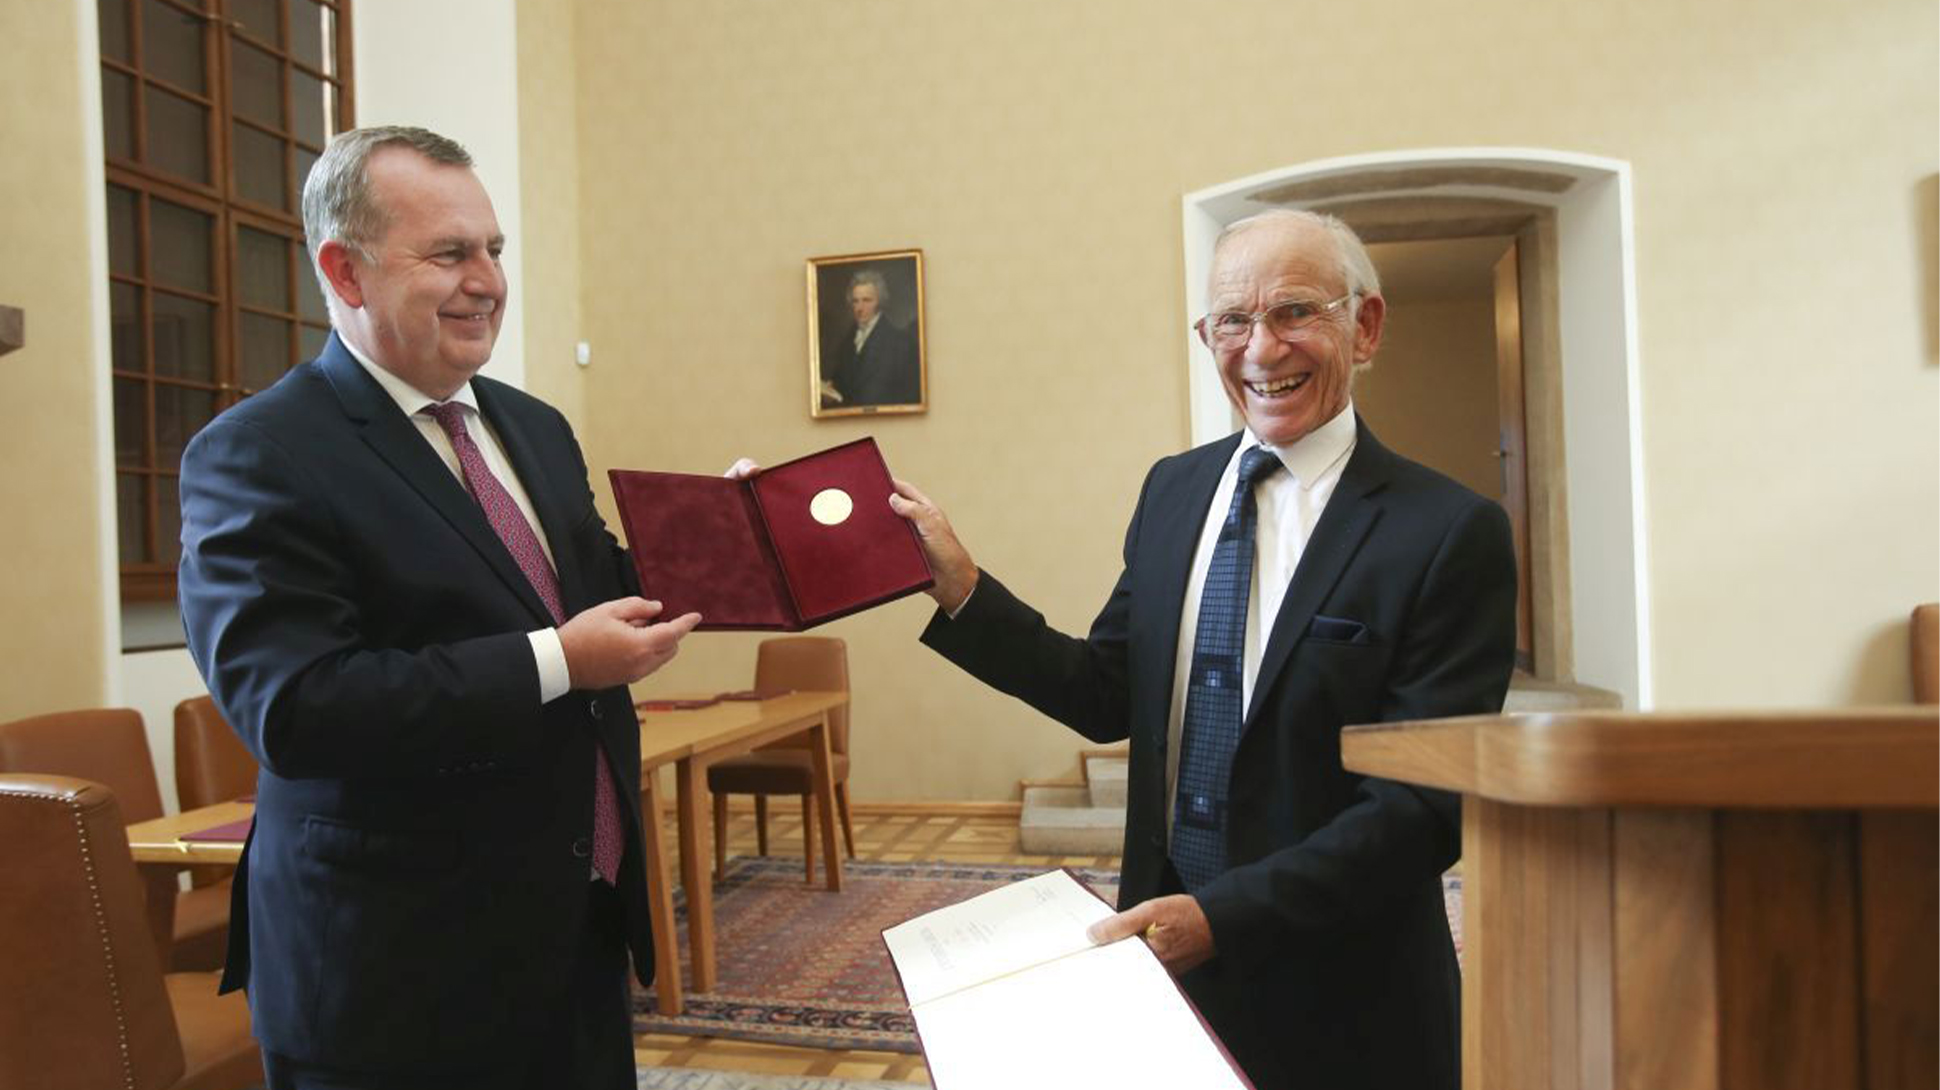 Europeaum’s Graham awarded medal from Rector Tomáš Zima